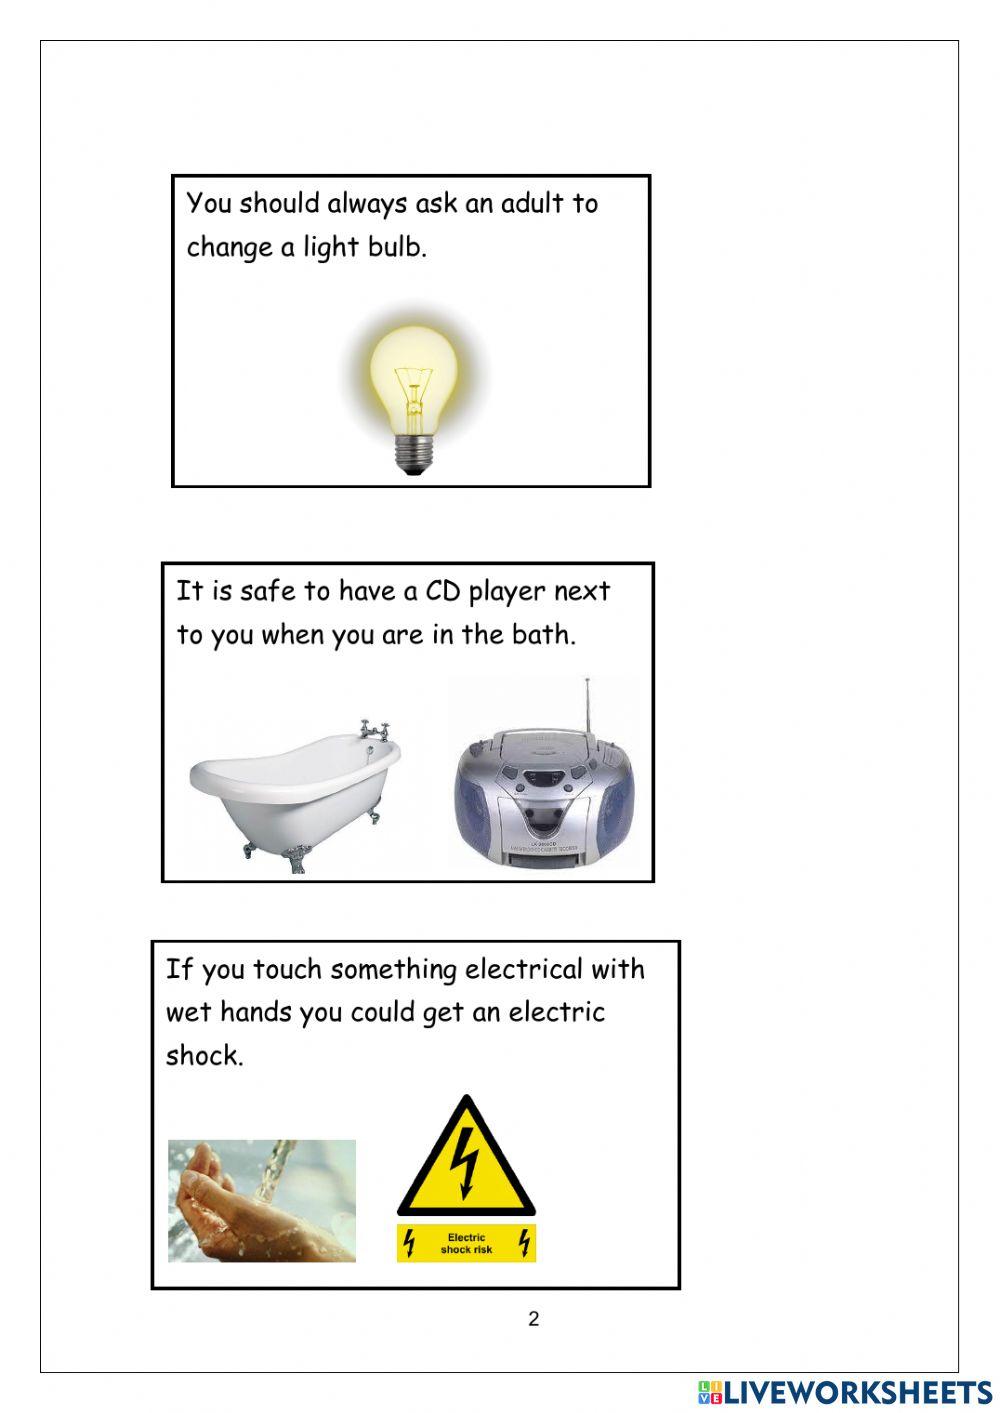 Electricity- Safety